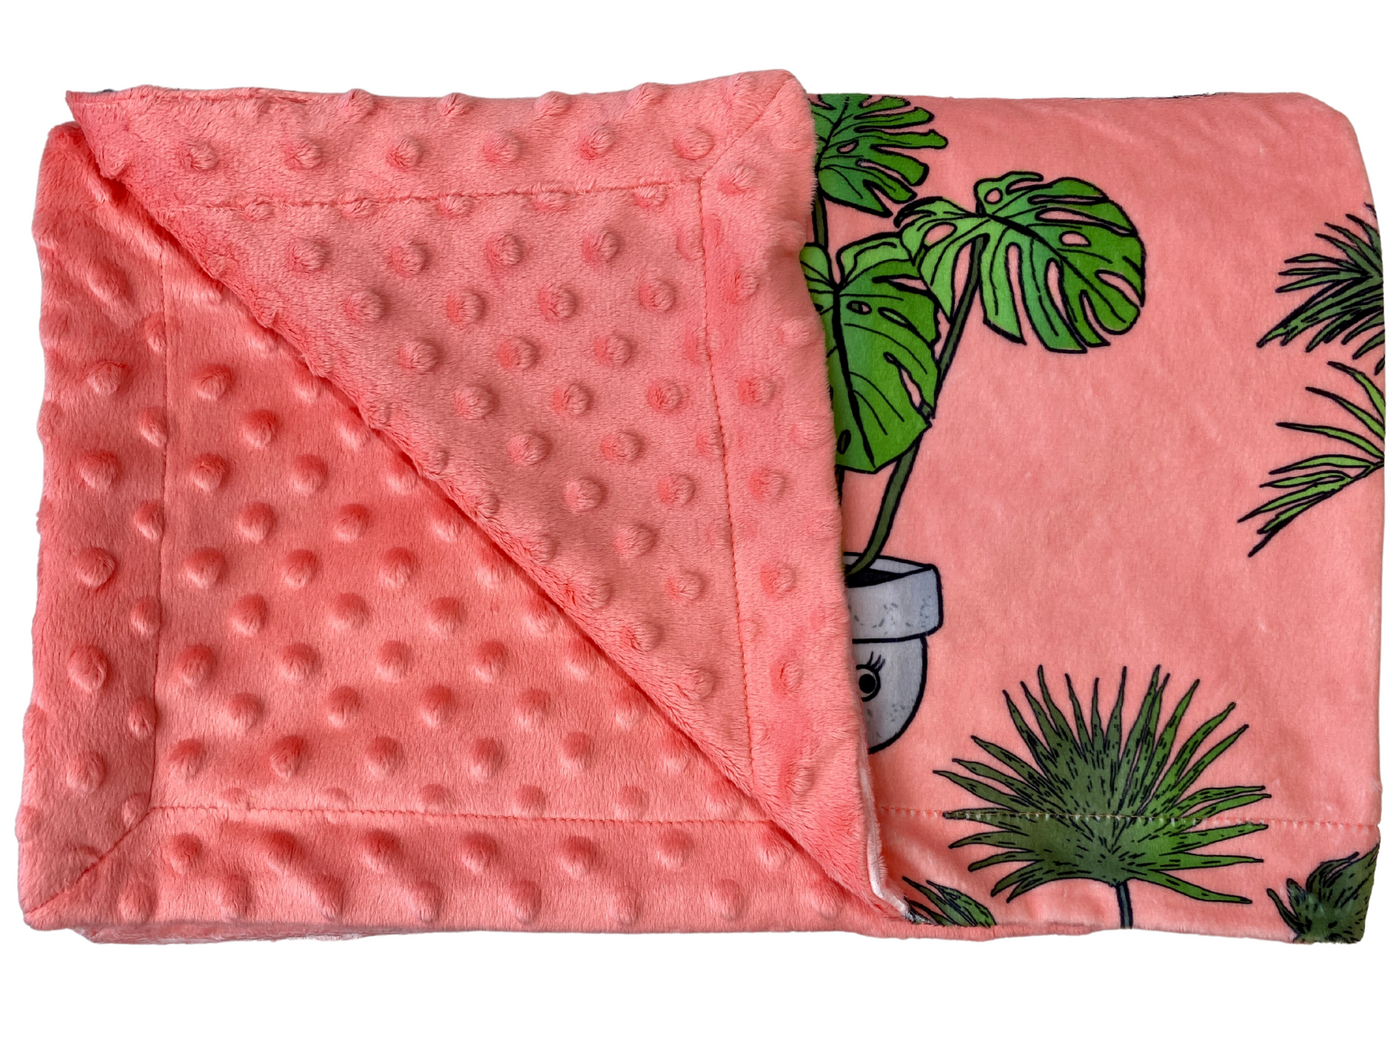 Baby blanket: Botanical Garden Collection (Coral Background)